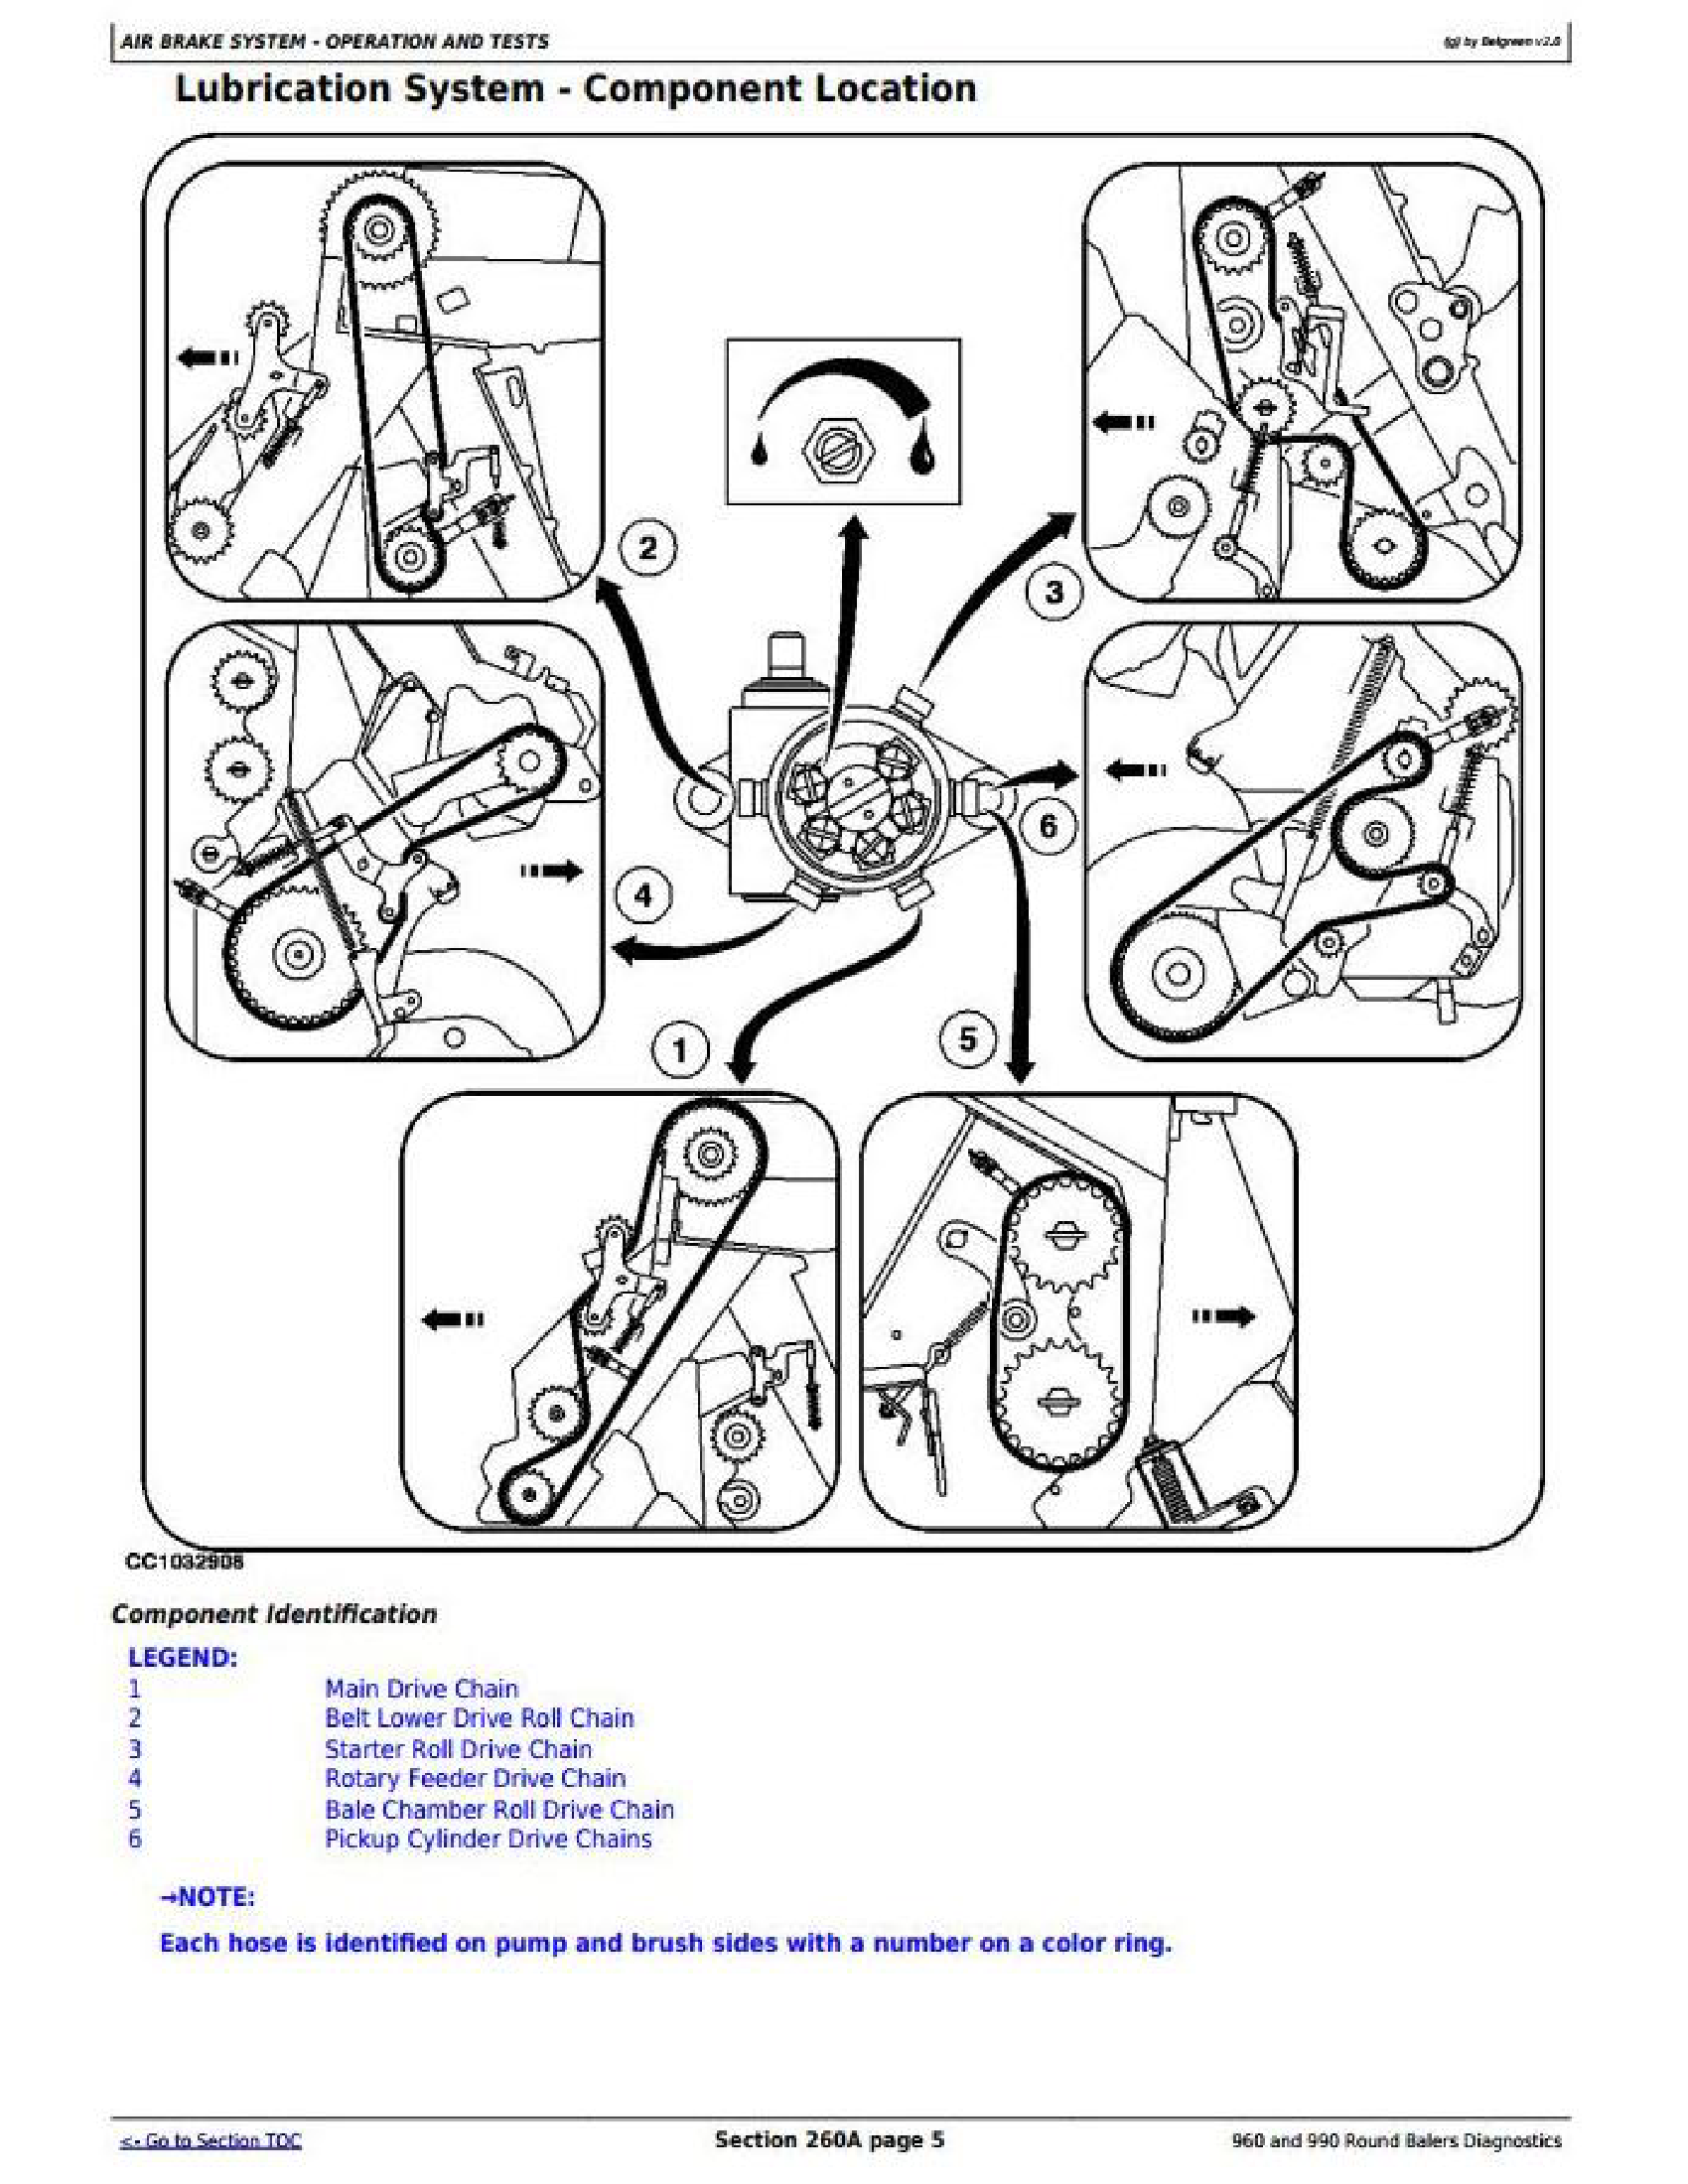 John Deere 1WZ manual pdf